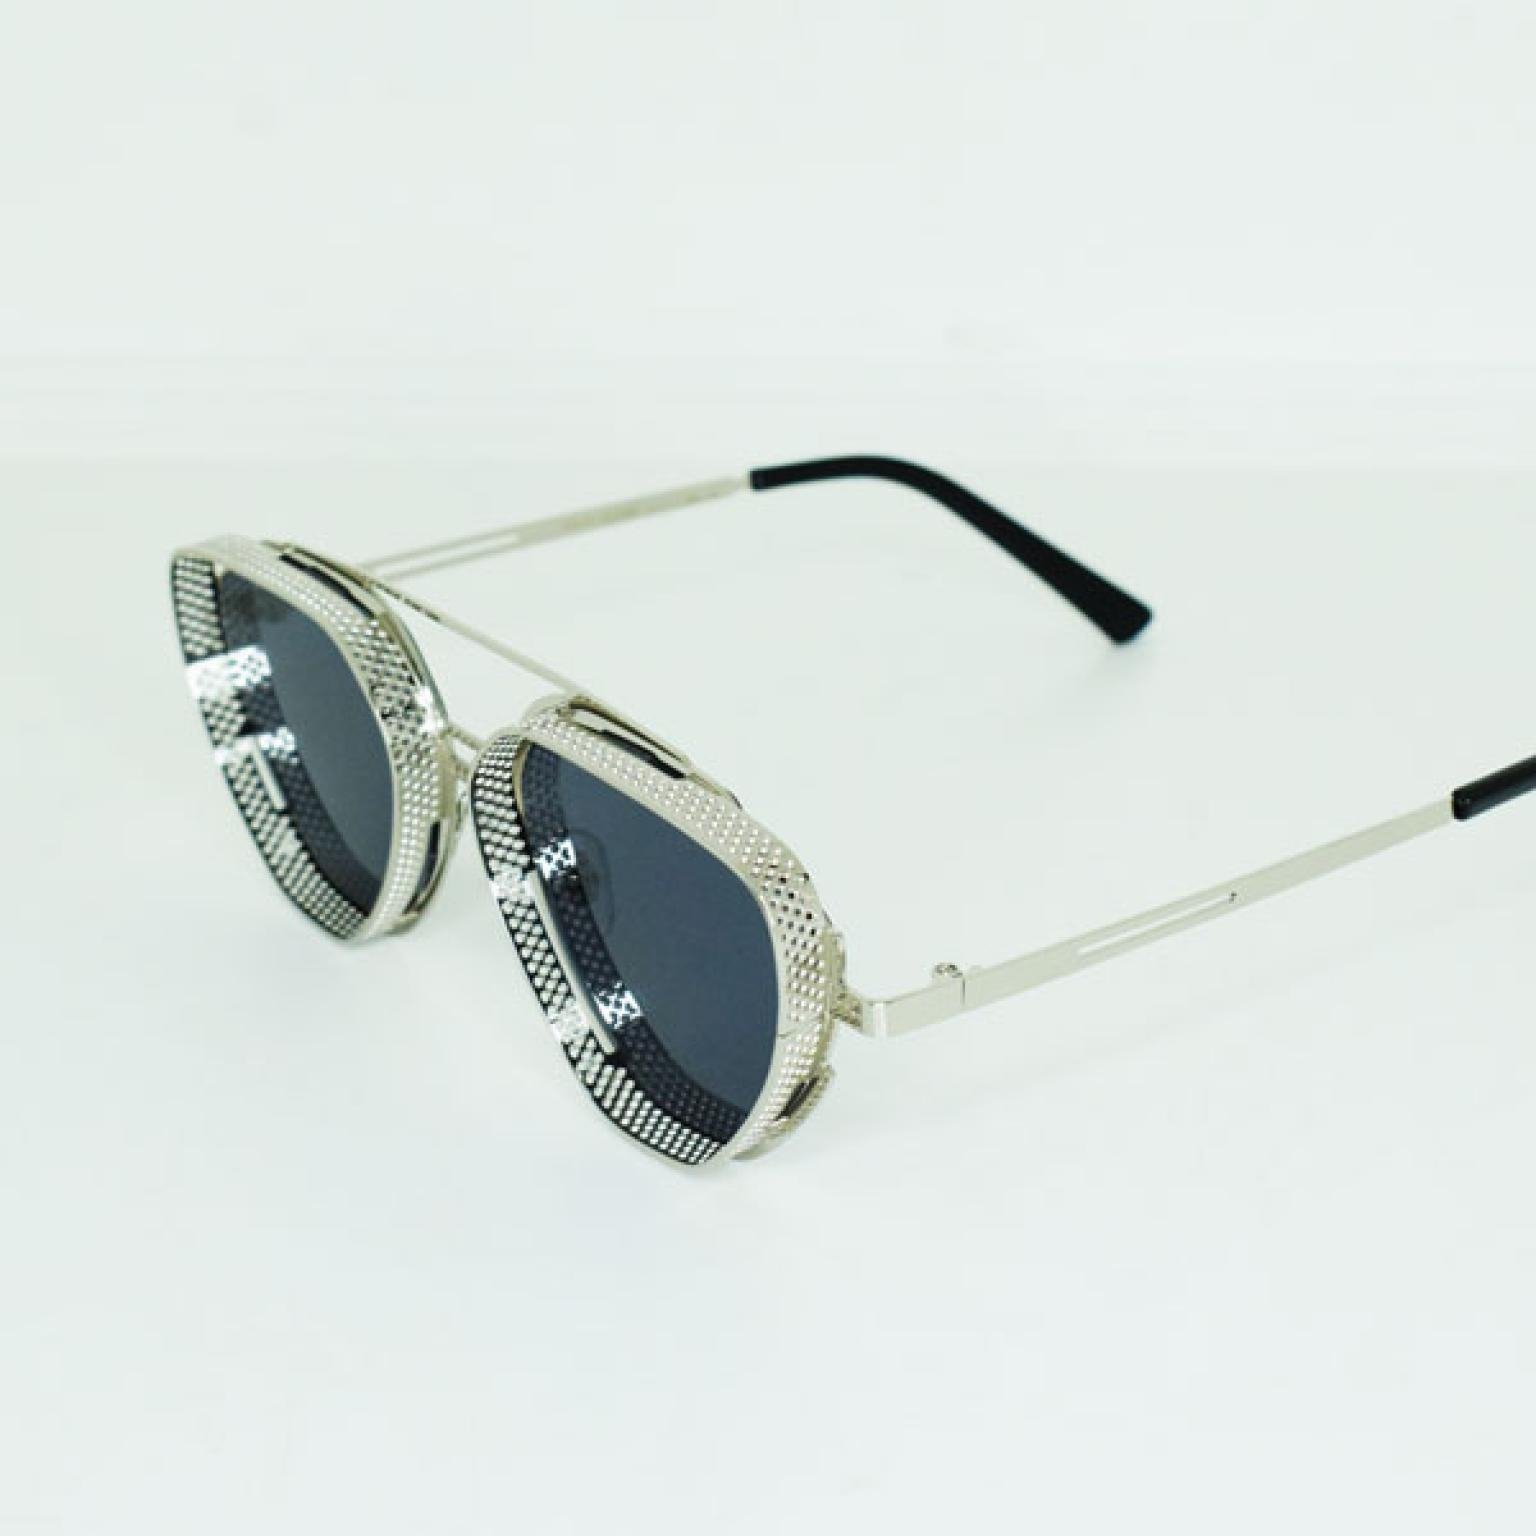 All New Design Limited Edition Fashion Sunglasses